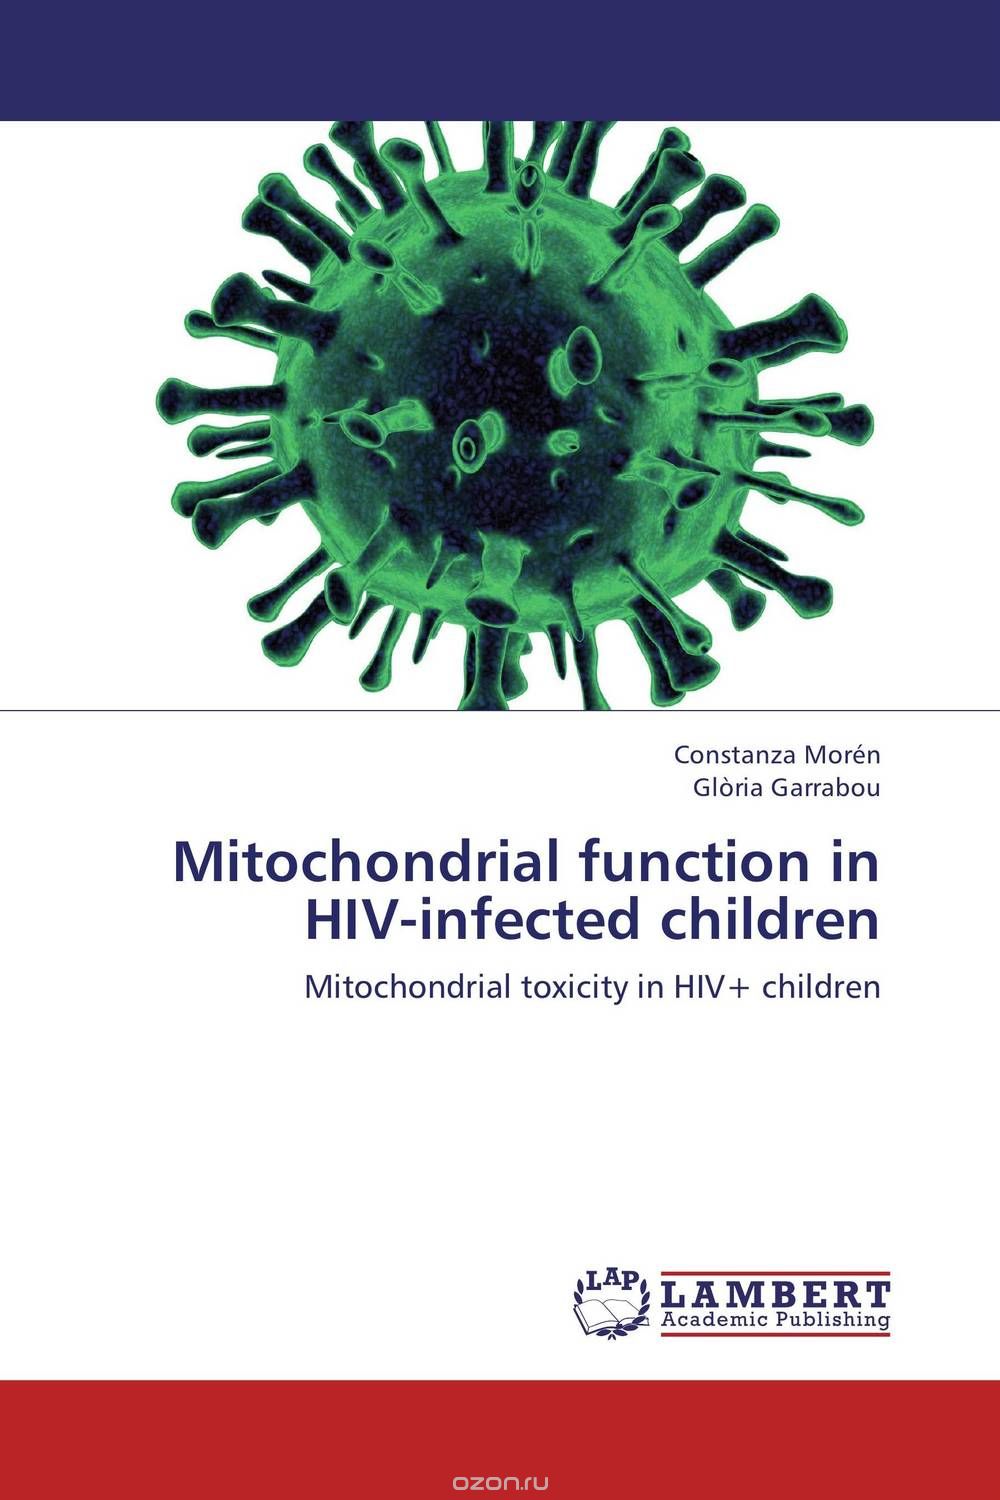 Скачать книгу "Mitochondrial function in HIV-infected children"